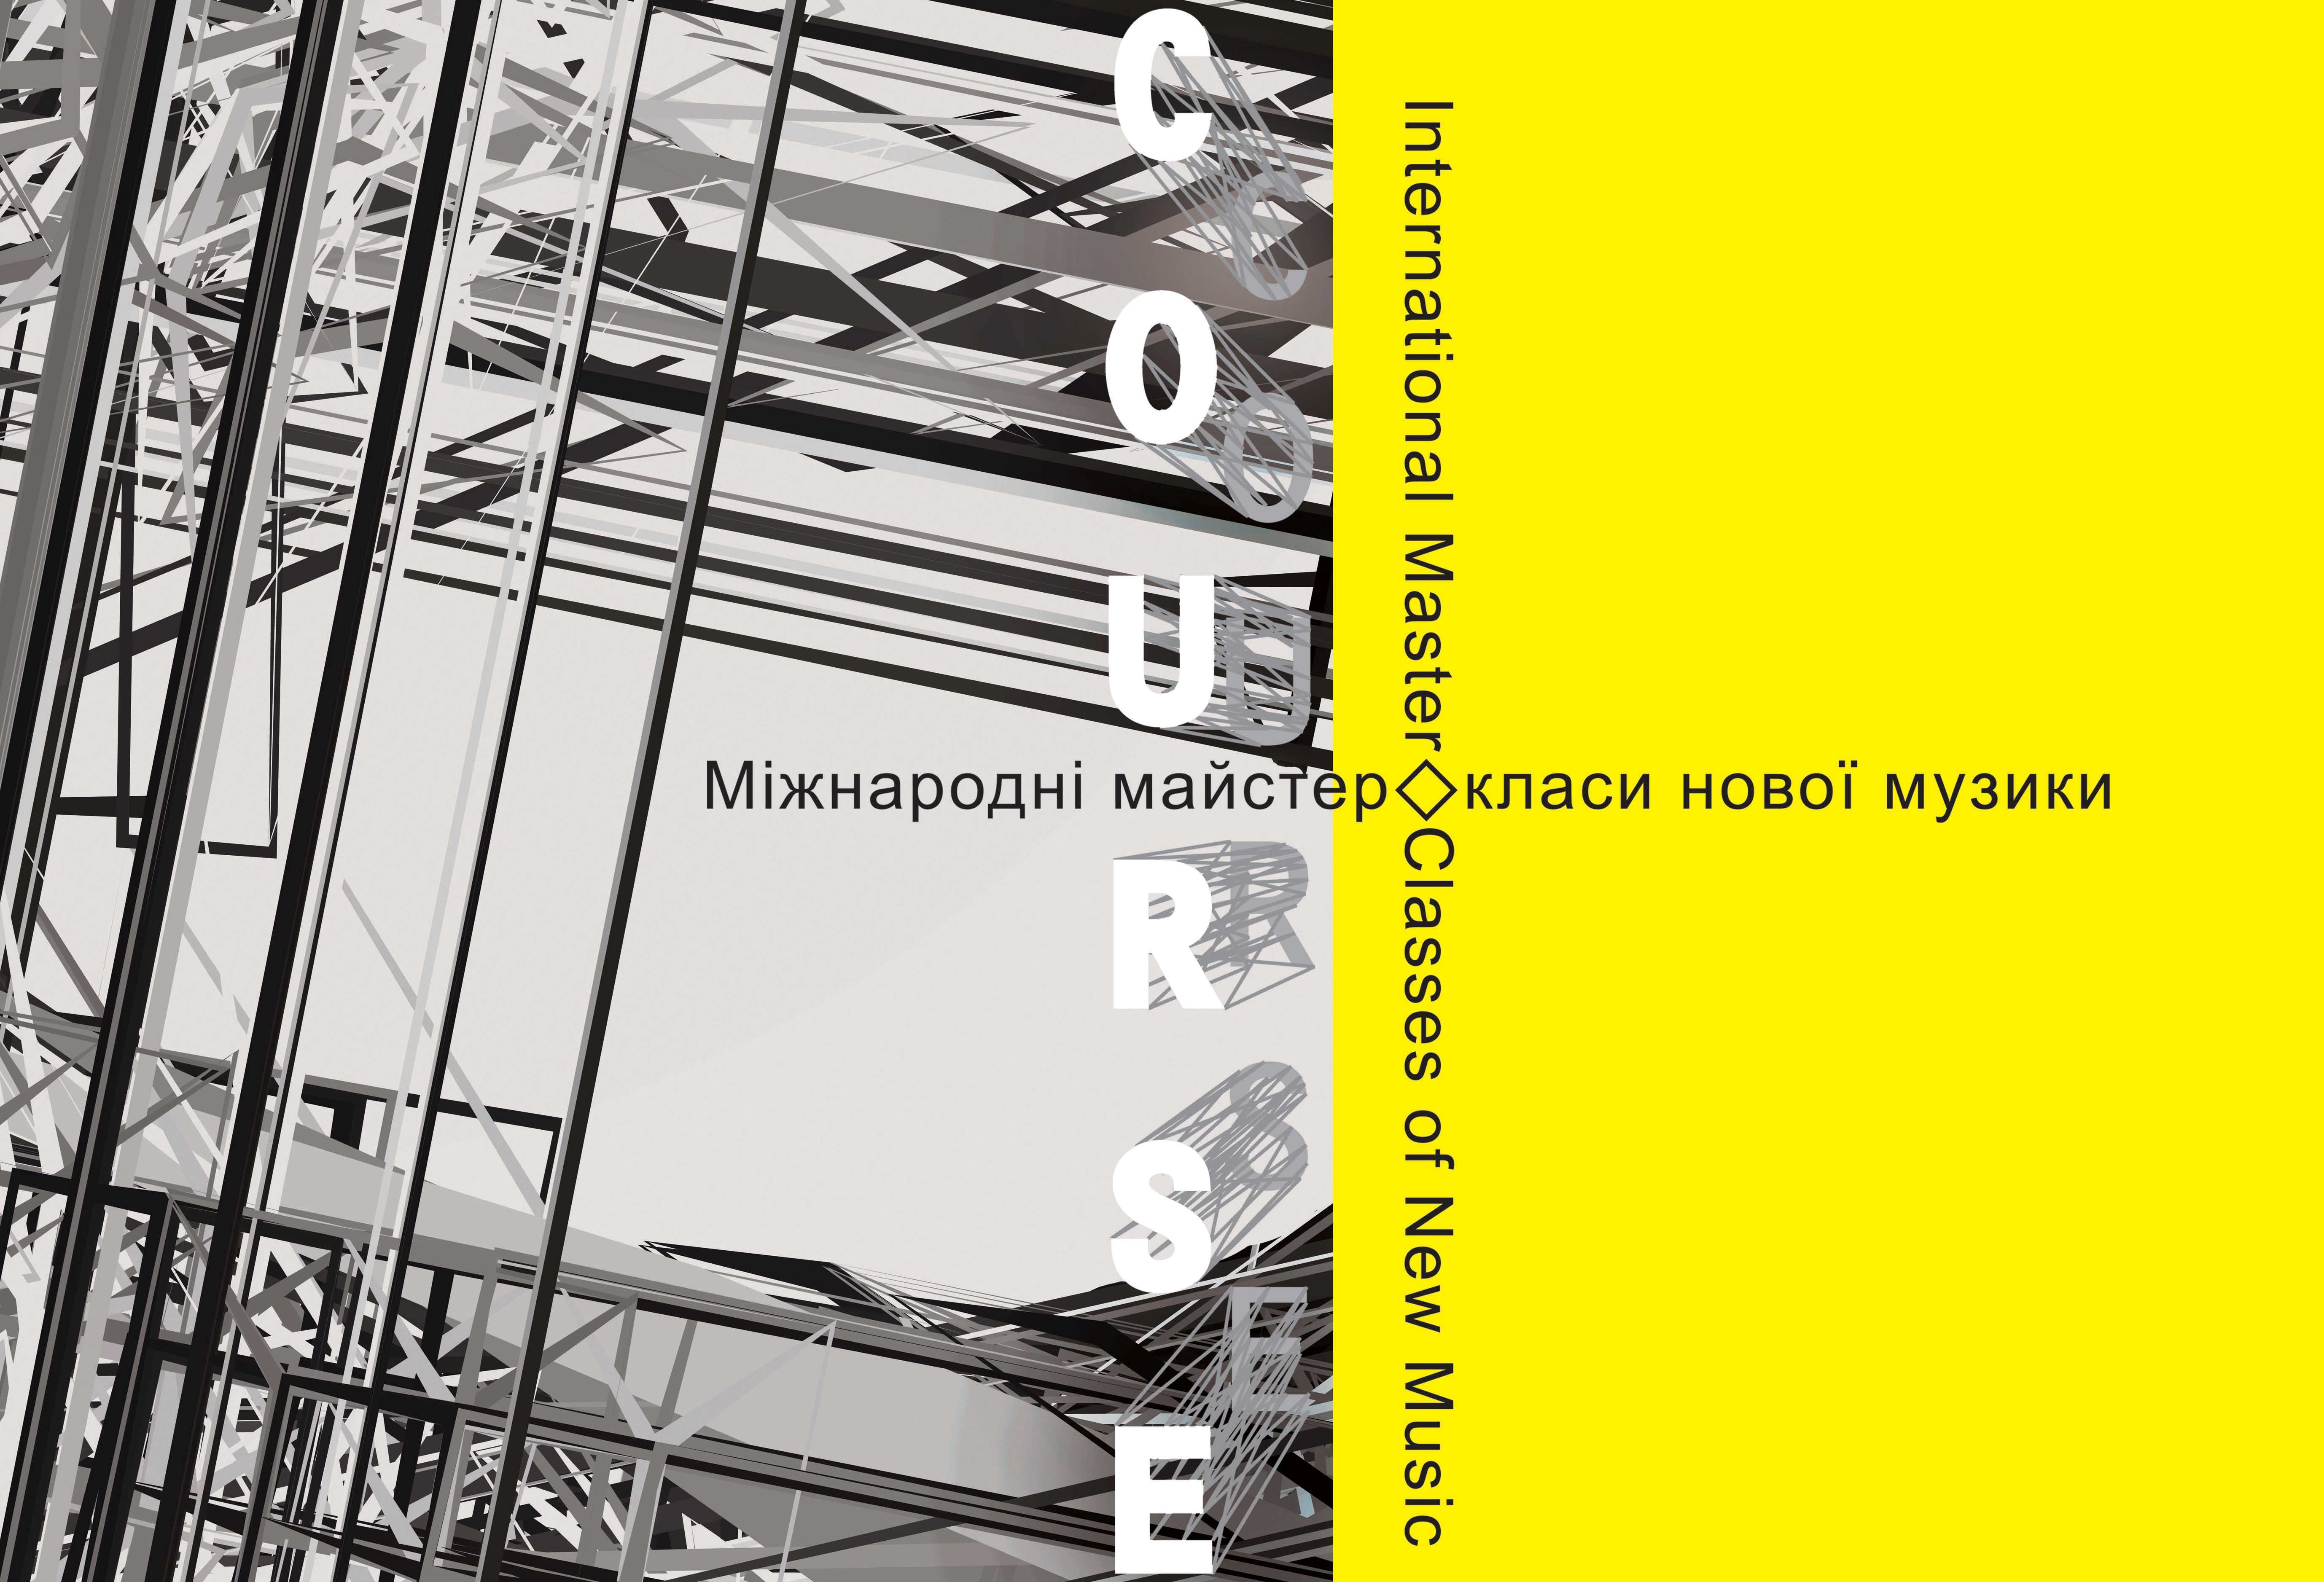 Копия v course [2016] poster